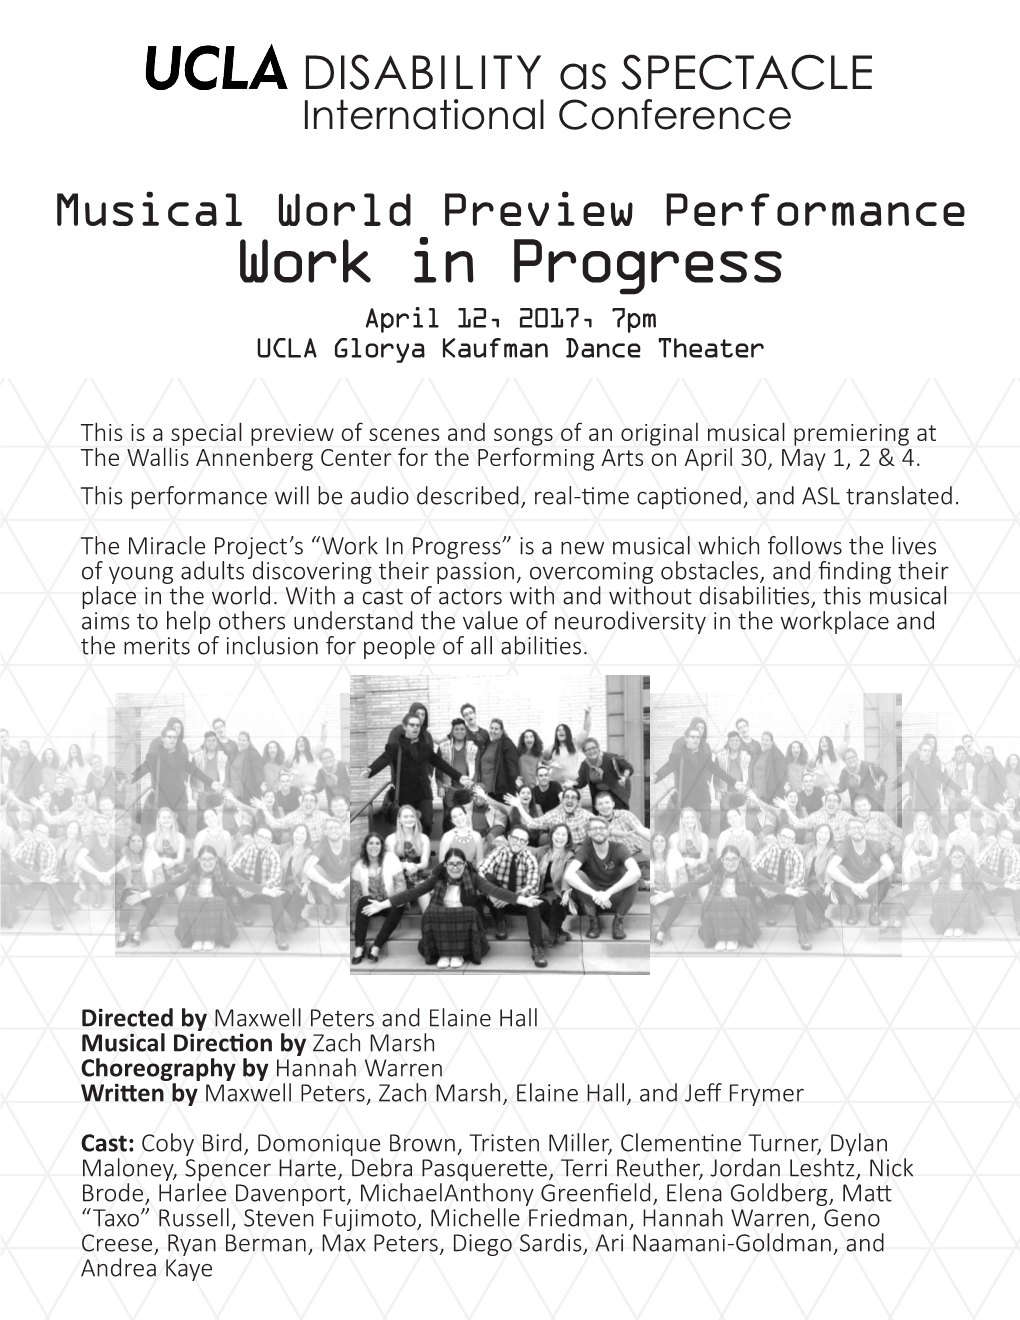 Work in Progress April 12, 2017, 7Pm UCLA Glorya Kaufman Dance Theater